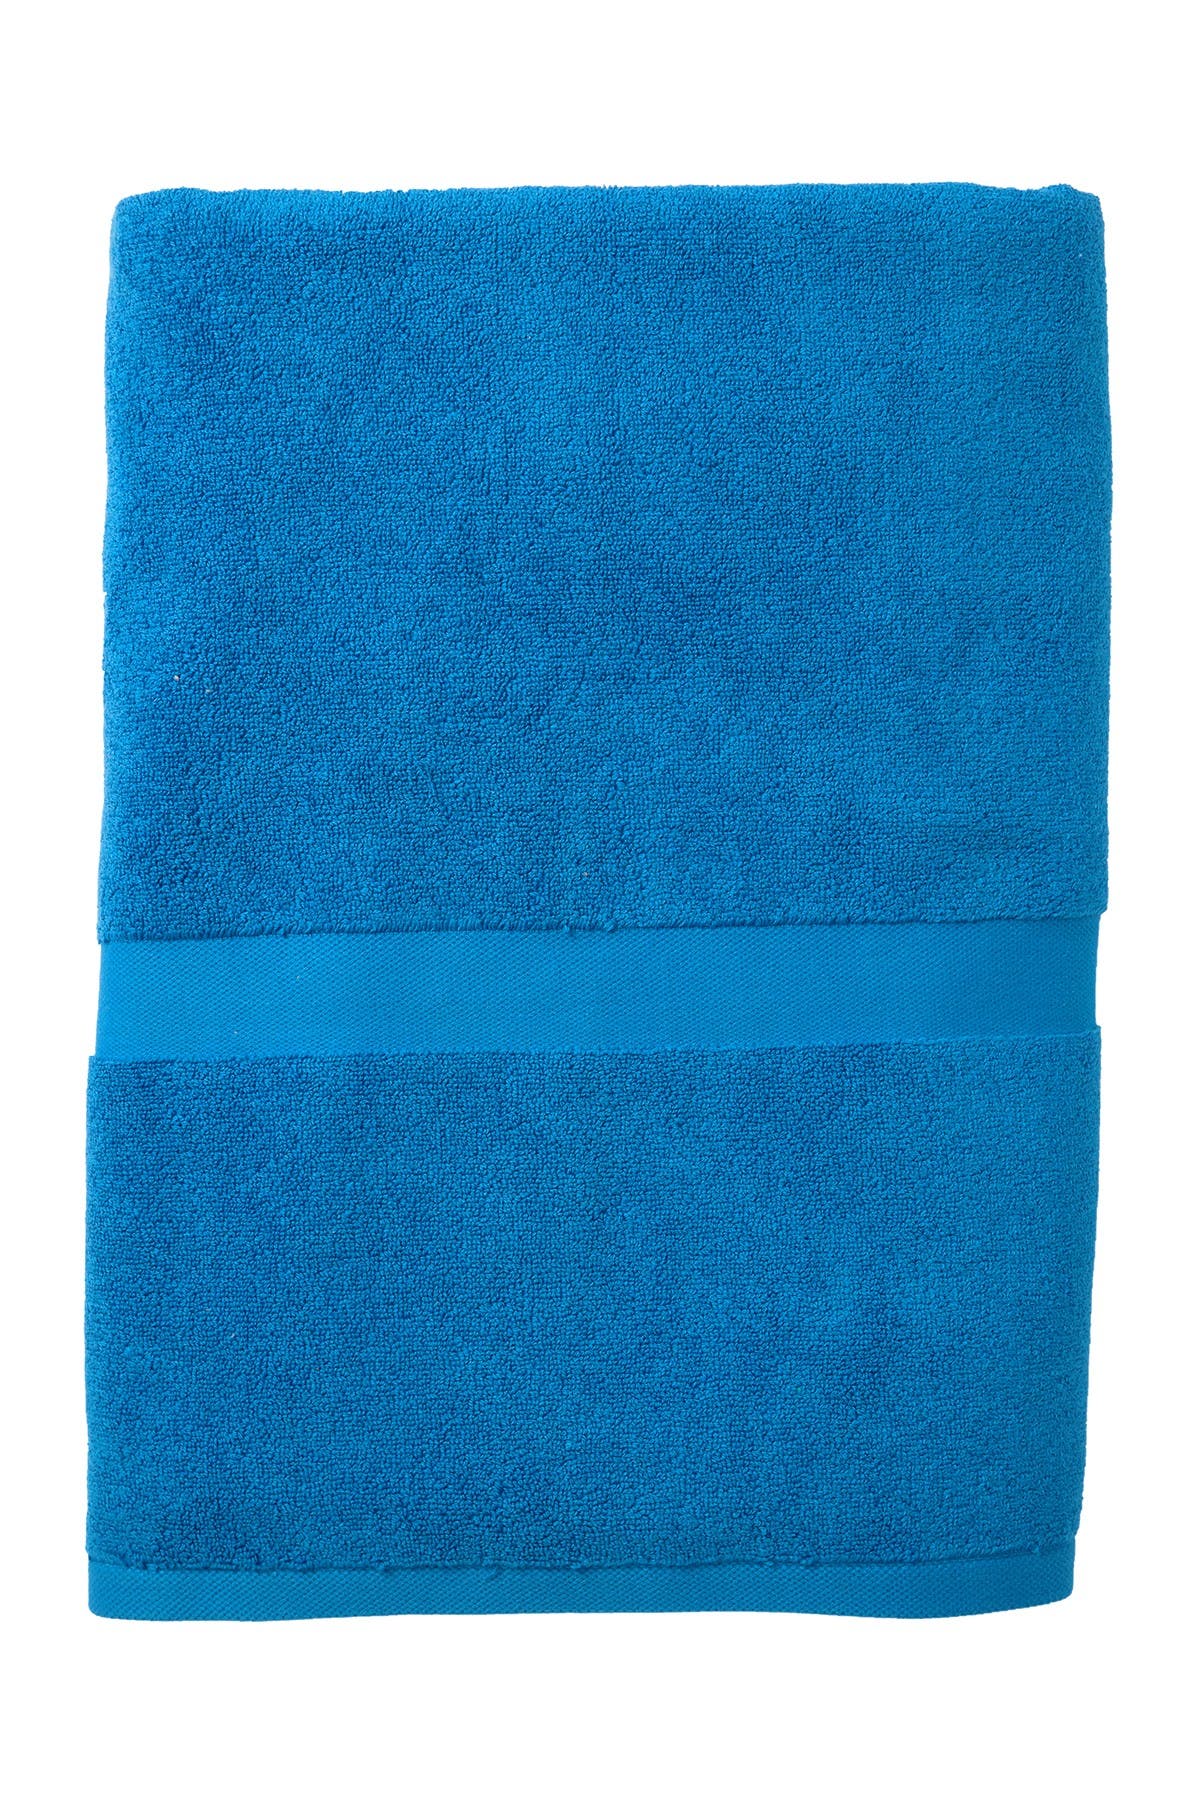 Lacoste | BBB Court Towel - 35x70 